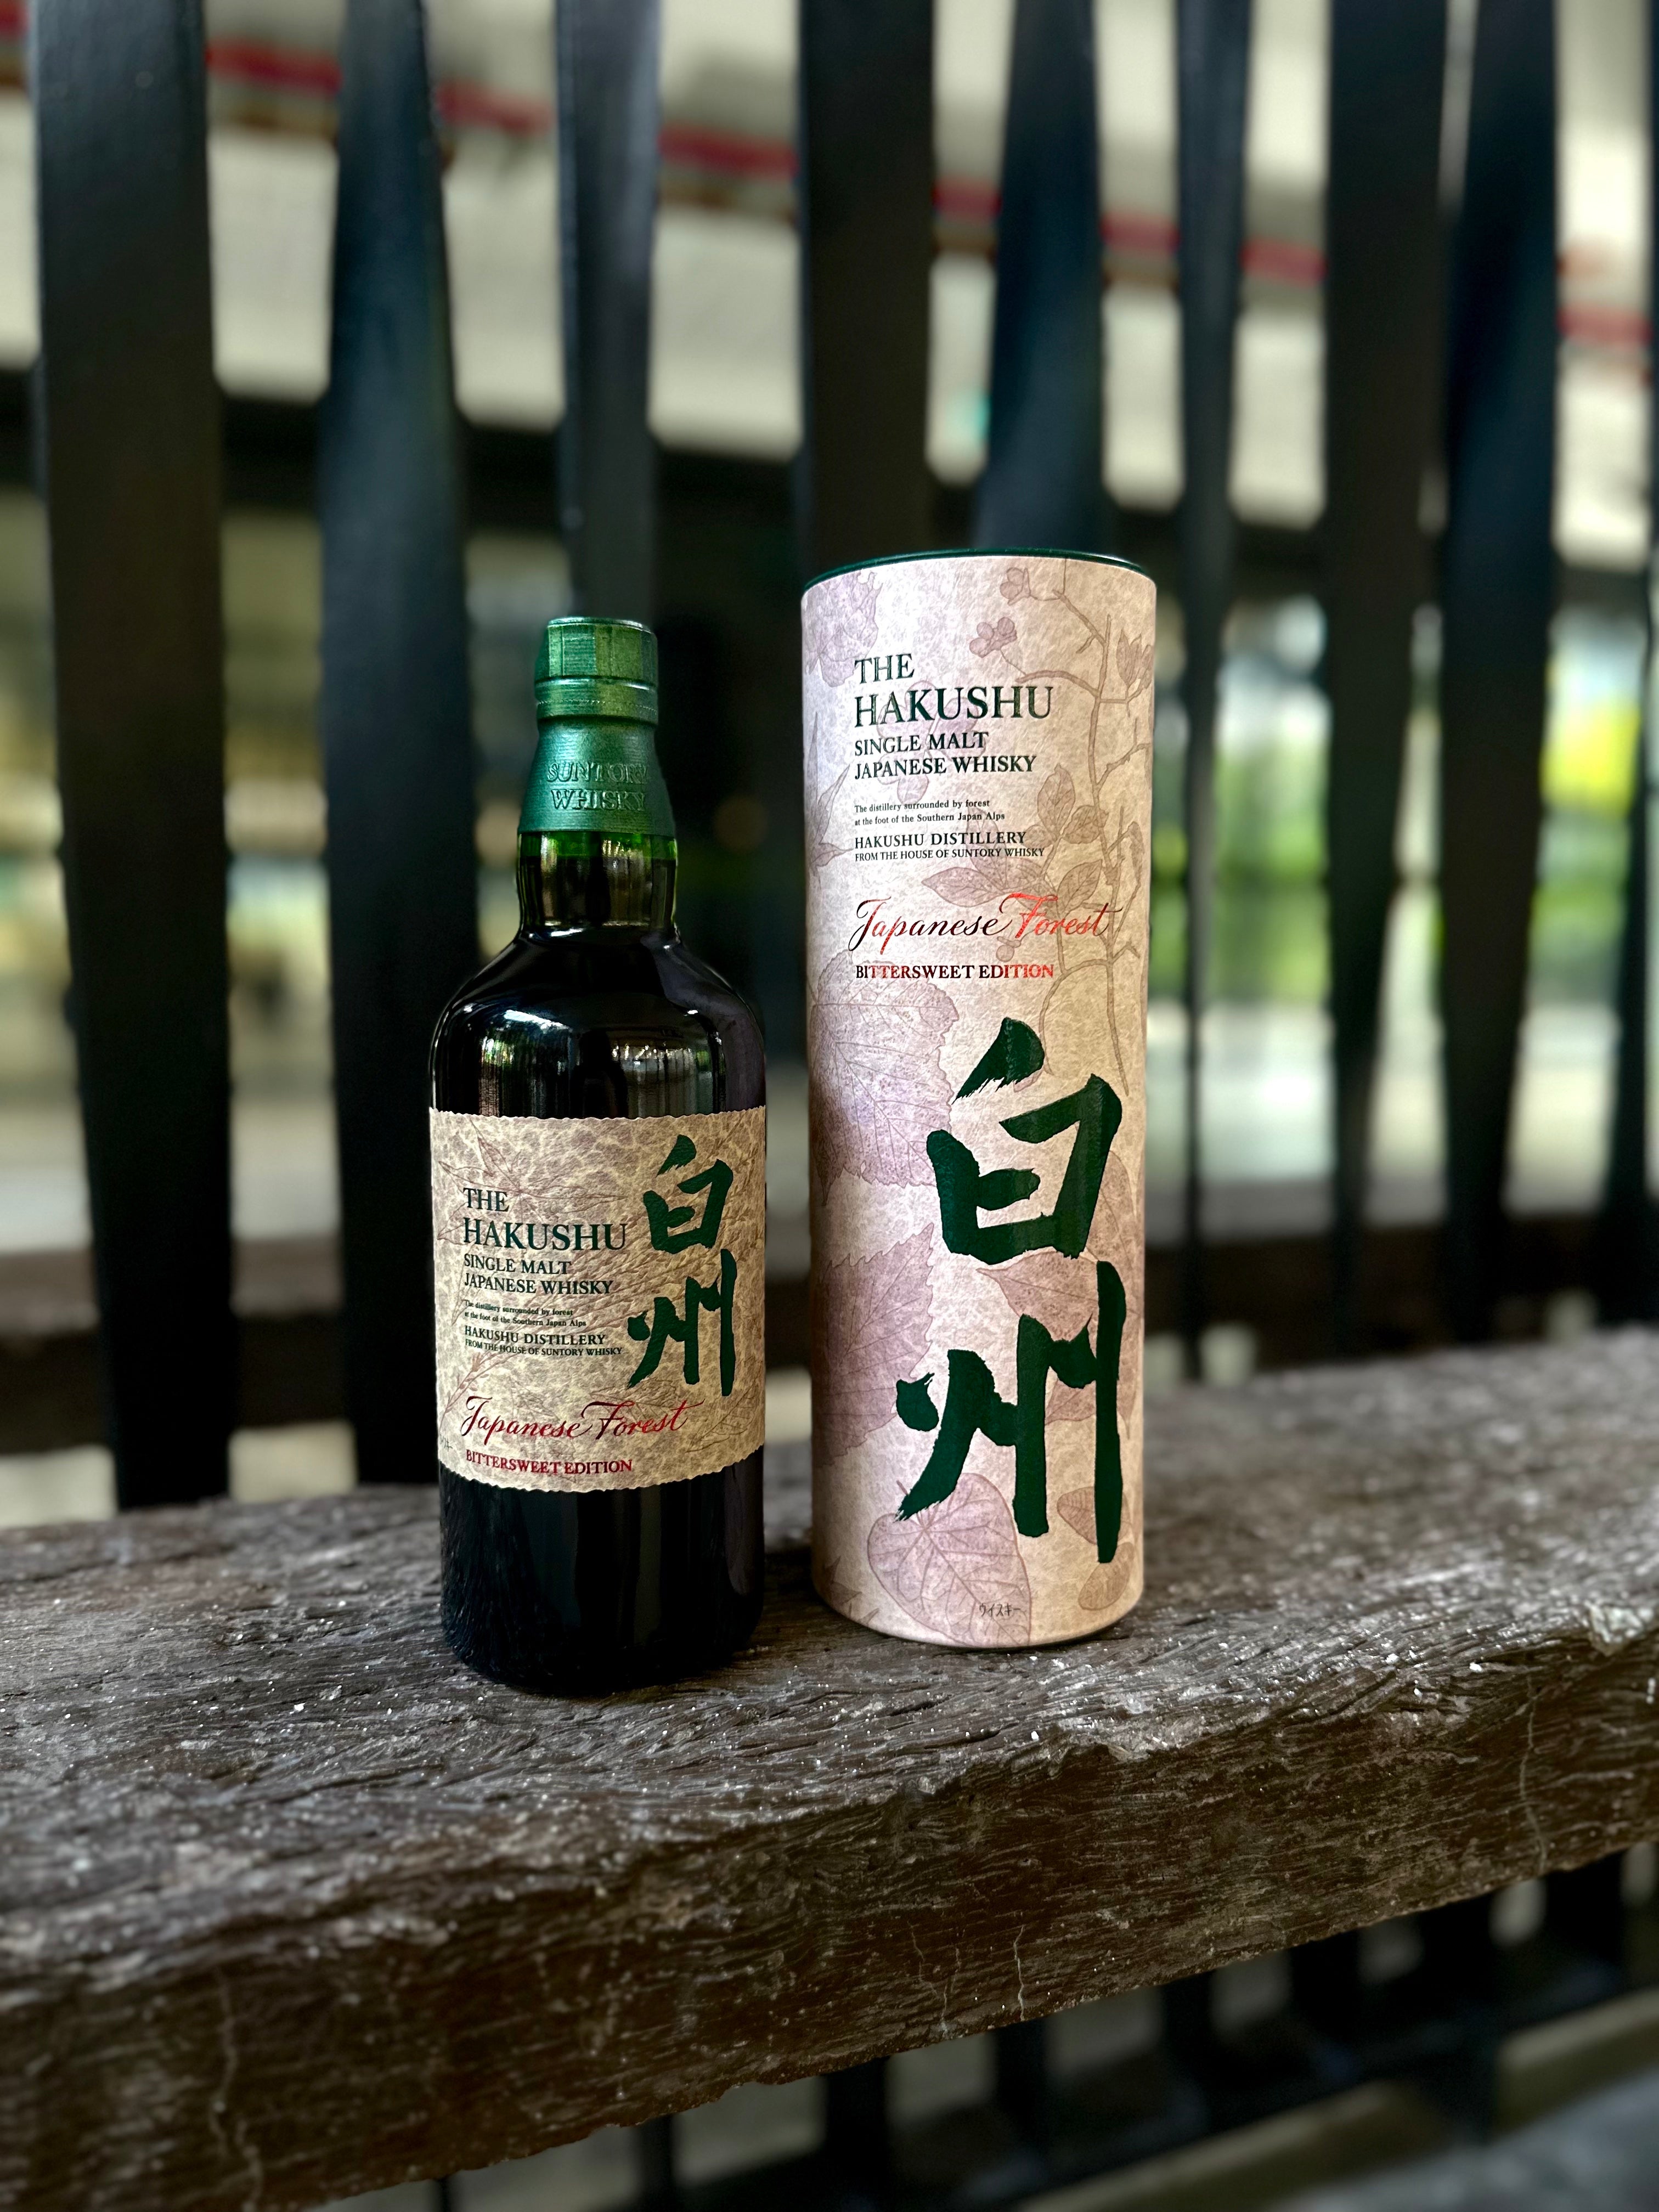 Suntory Hakushu Japanese Forest Bittersweet Edition – Japan Whisky Sg